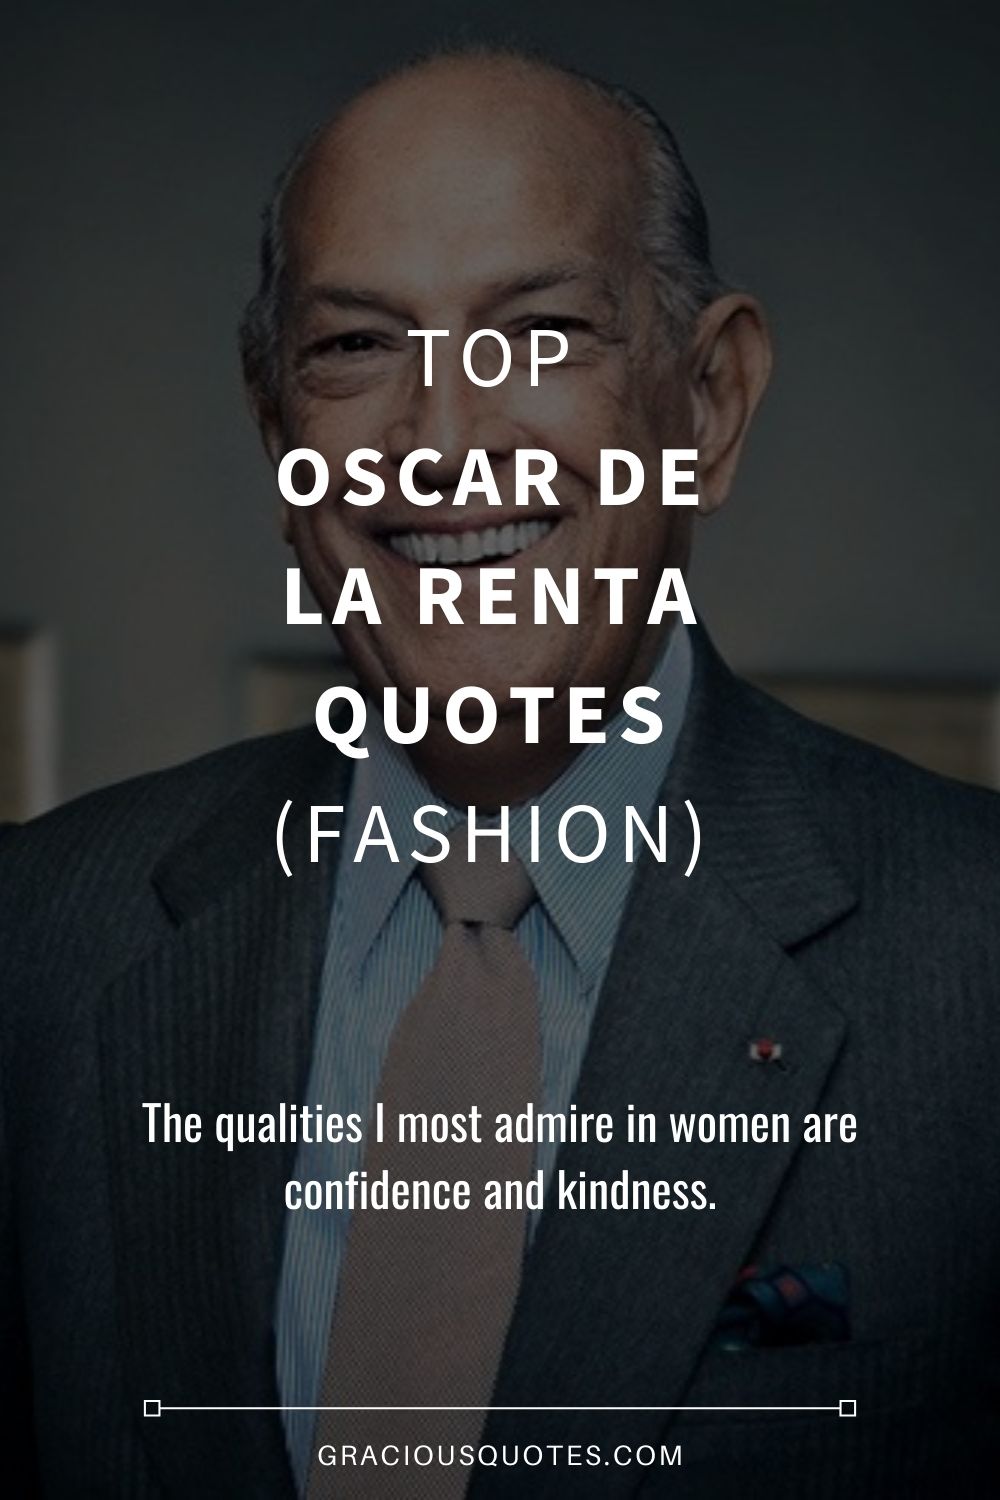 Top Oscar de la Renta Quotes (FASHION) - Gracious Quotes